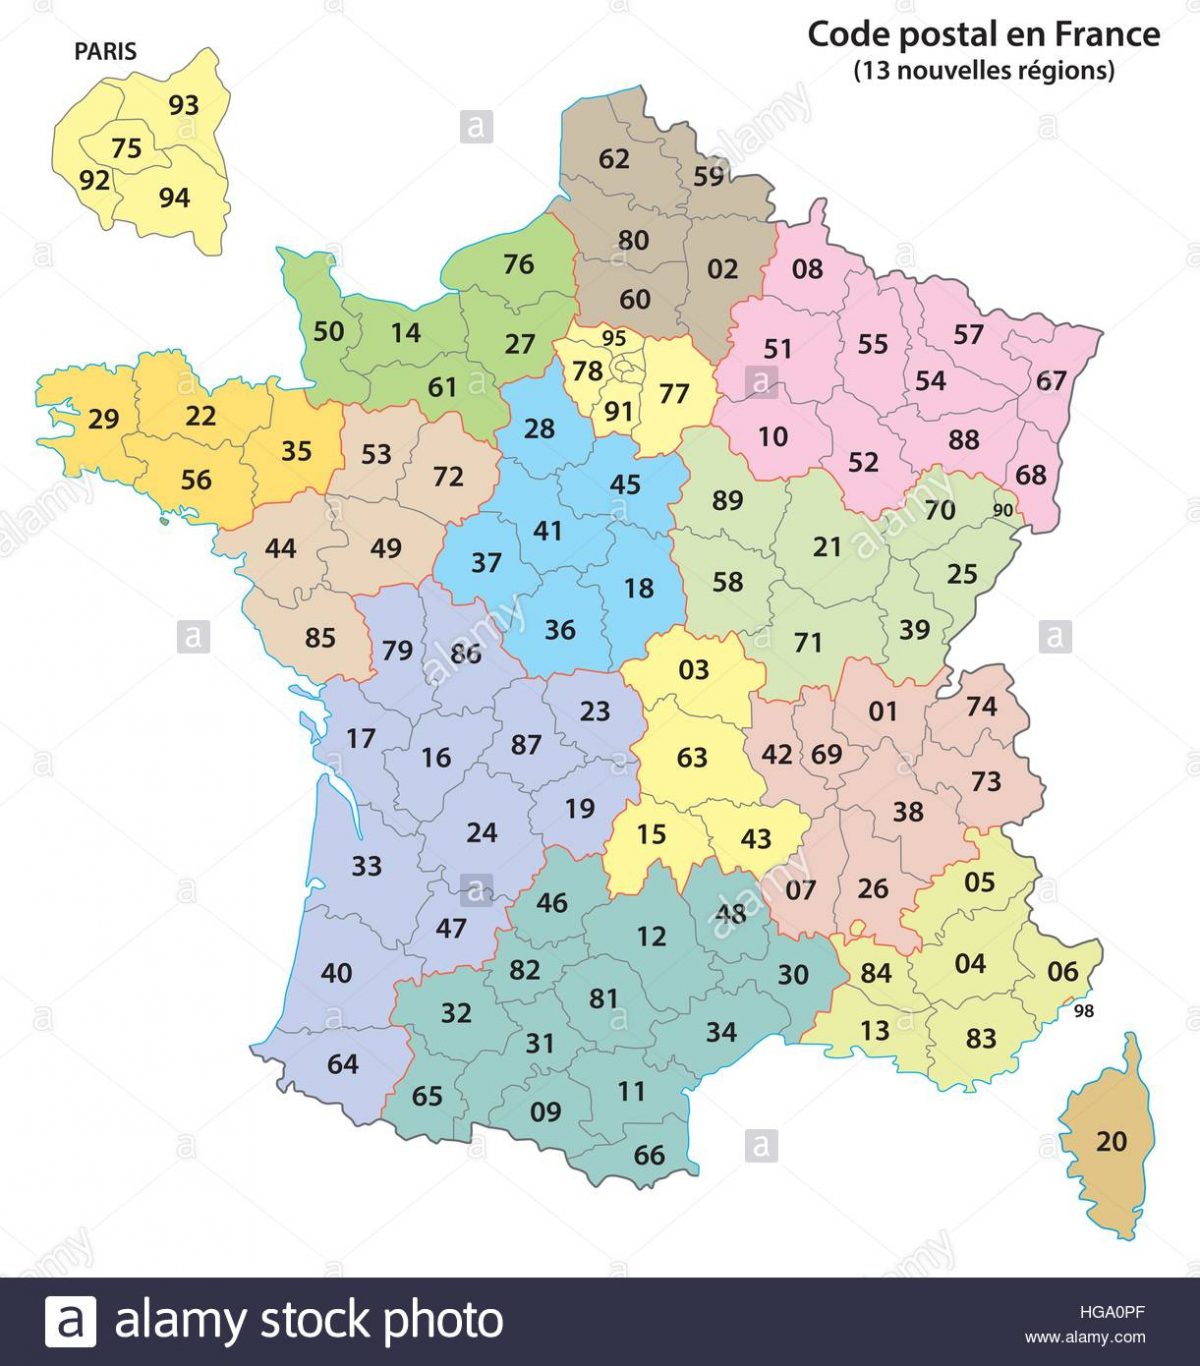 France 2 Digit Postcodes Map 2017 13 Regions Stock Vector Pour 13 Regions Francaises 1200x1366 